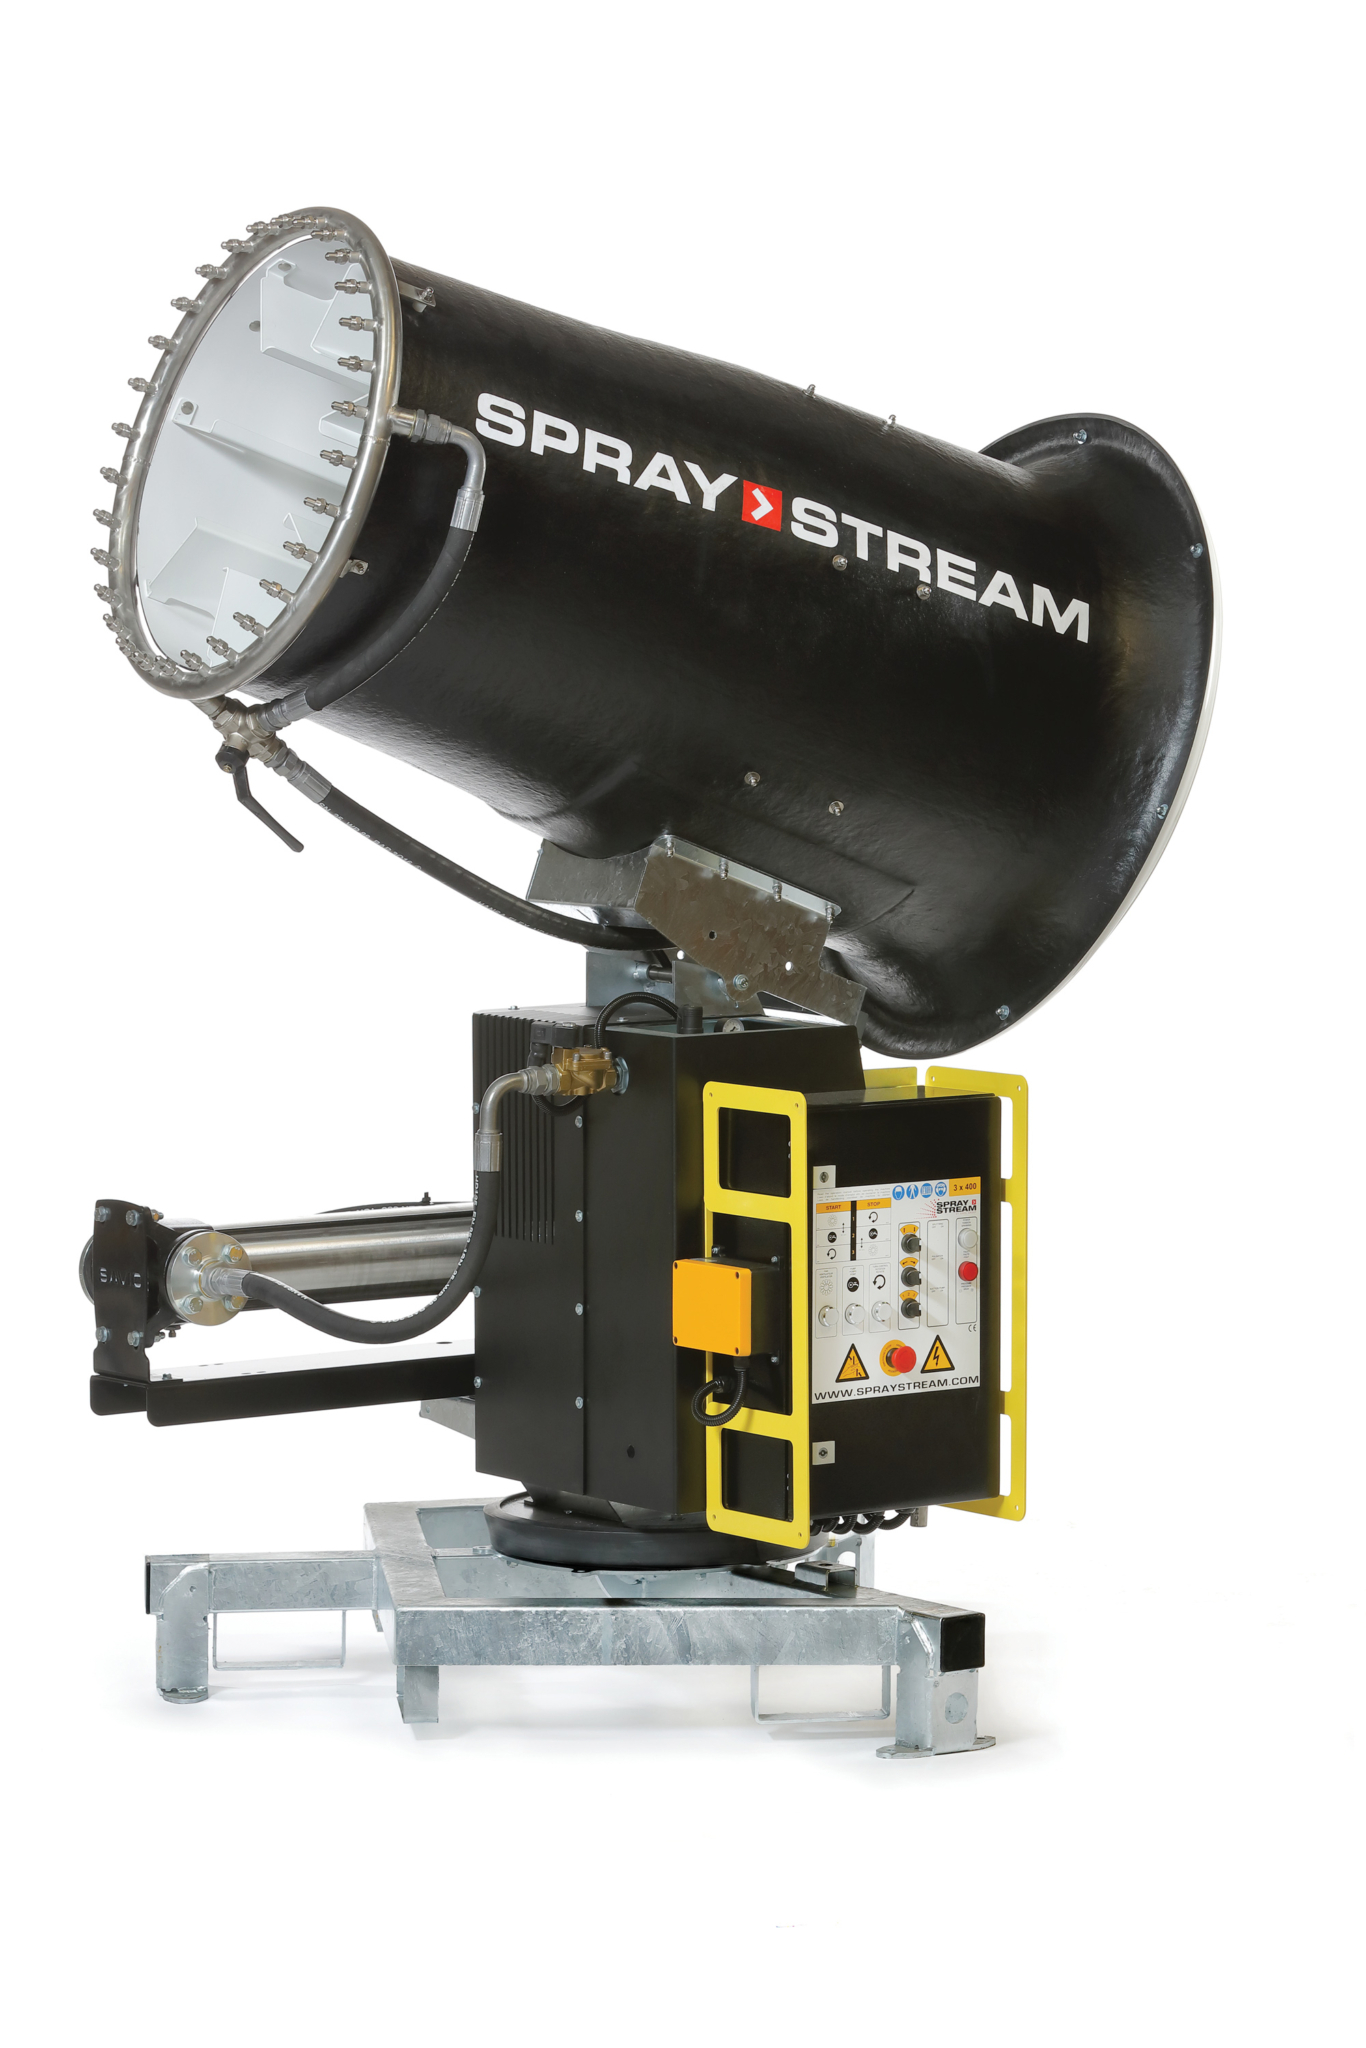 Spraystream S7 5 SS50i 002